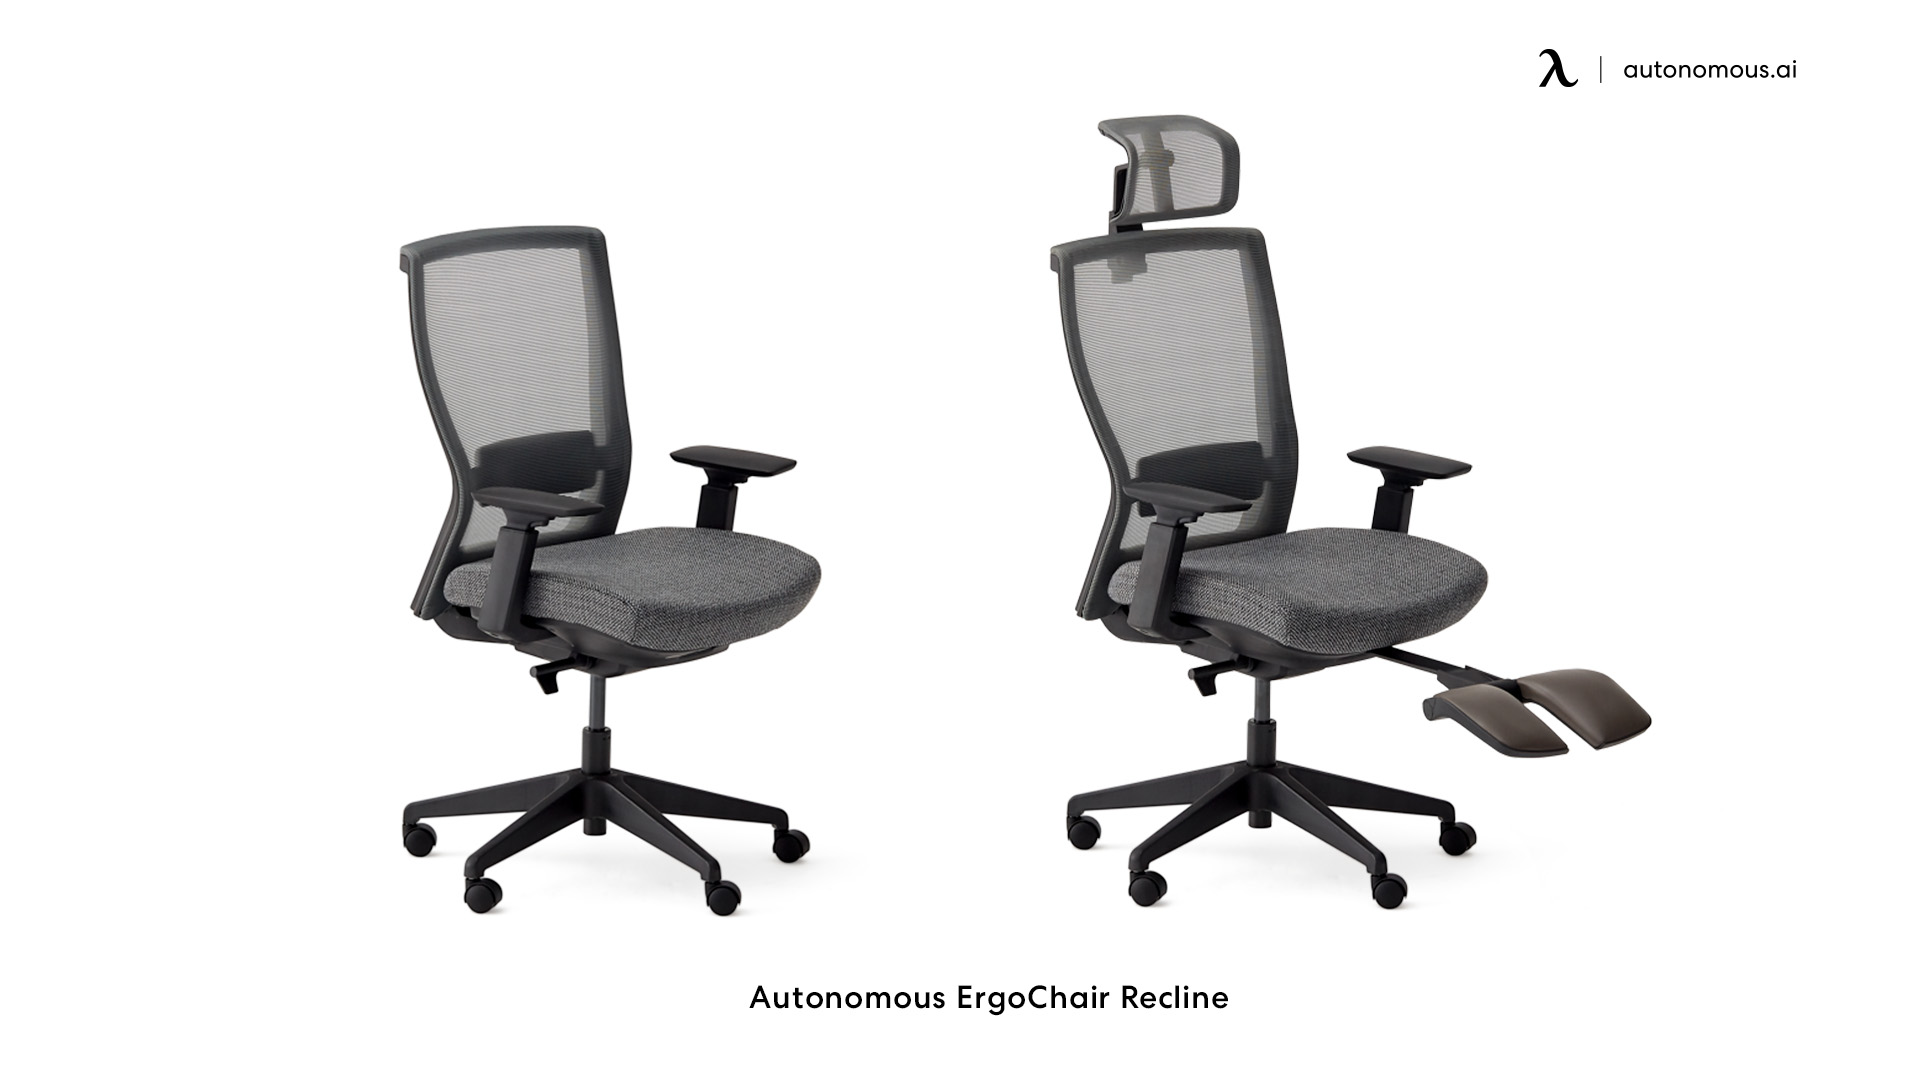 Autonomous ErgoChair Recline office chair with footrest